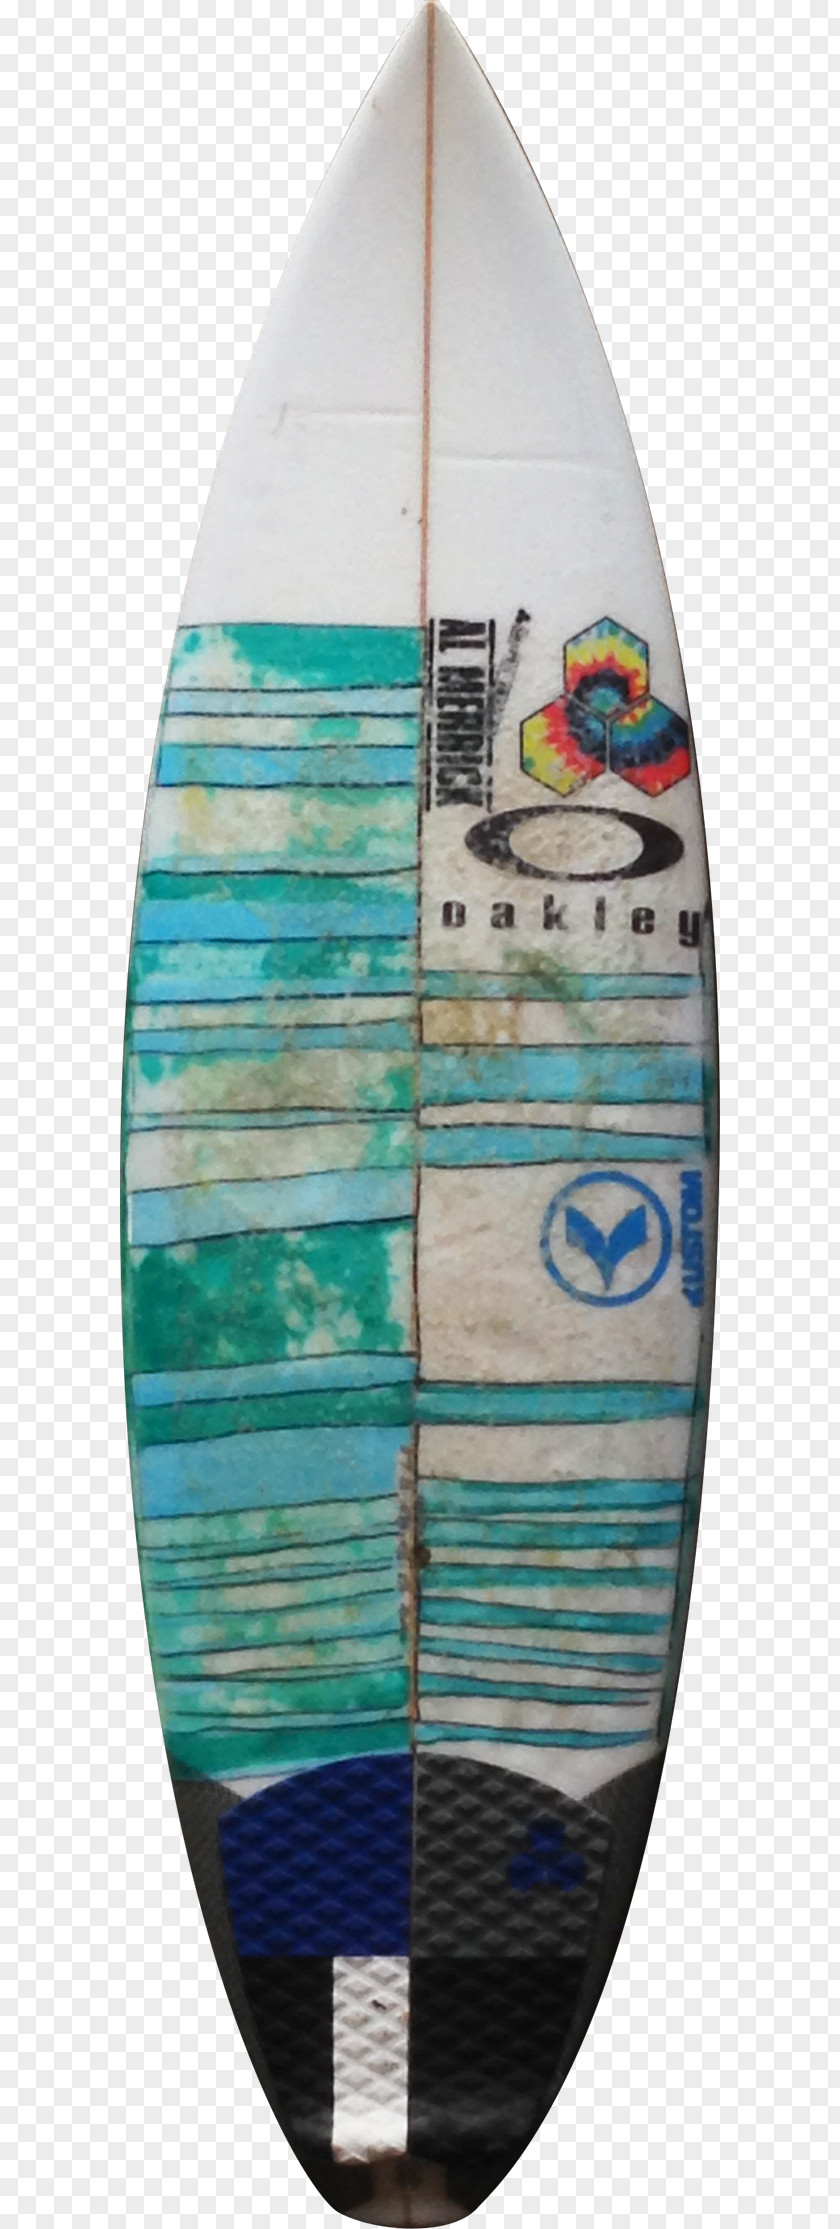 Surfing Channel Islands Surfboards Ojai Surf Art PNG